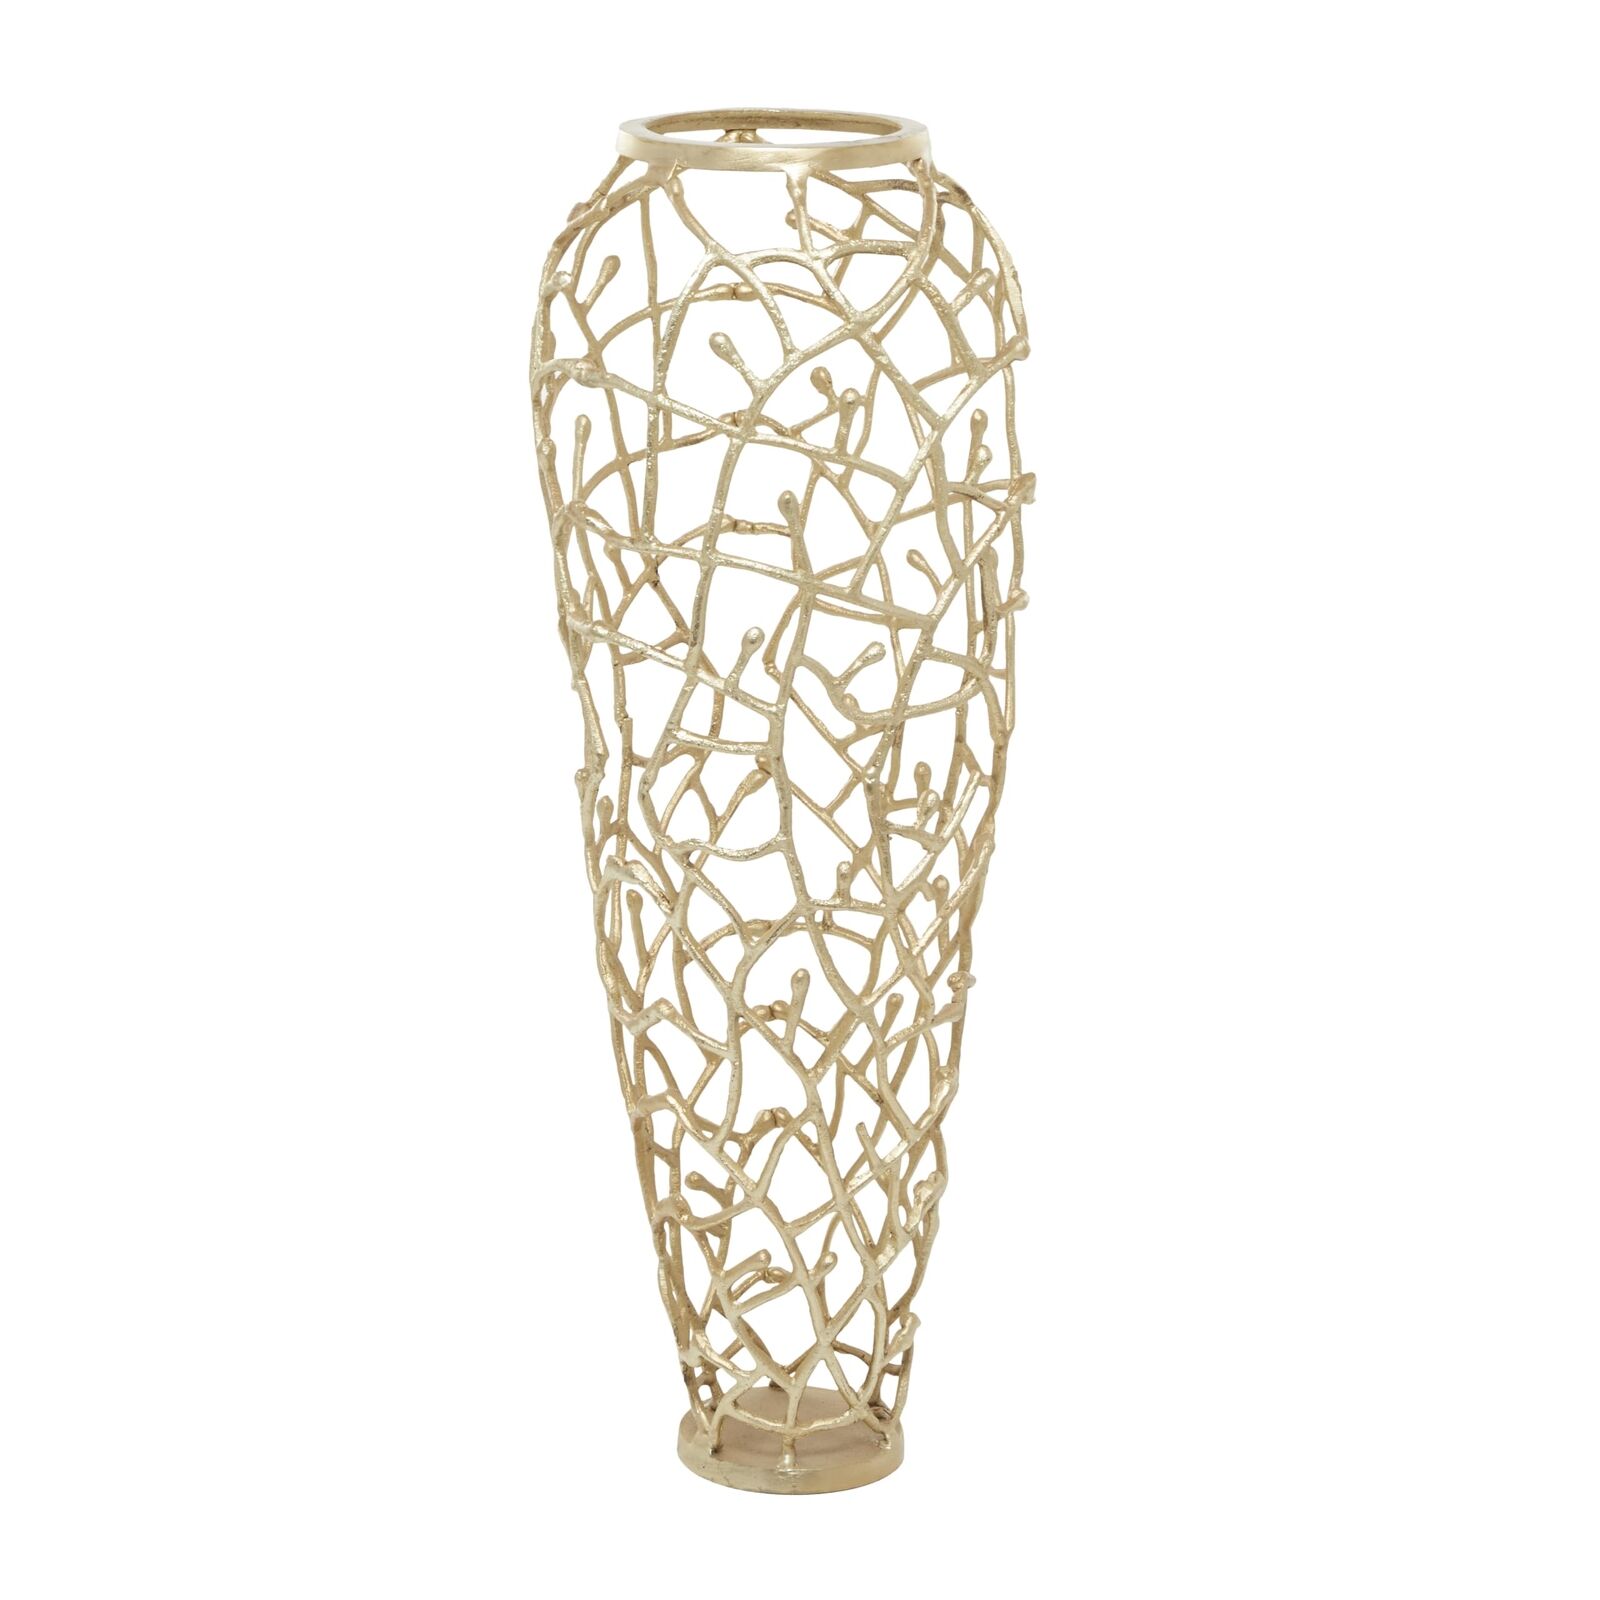 Deco 79 Contemporary Aluminum Vase LARGE SIZE Gold